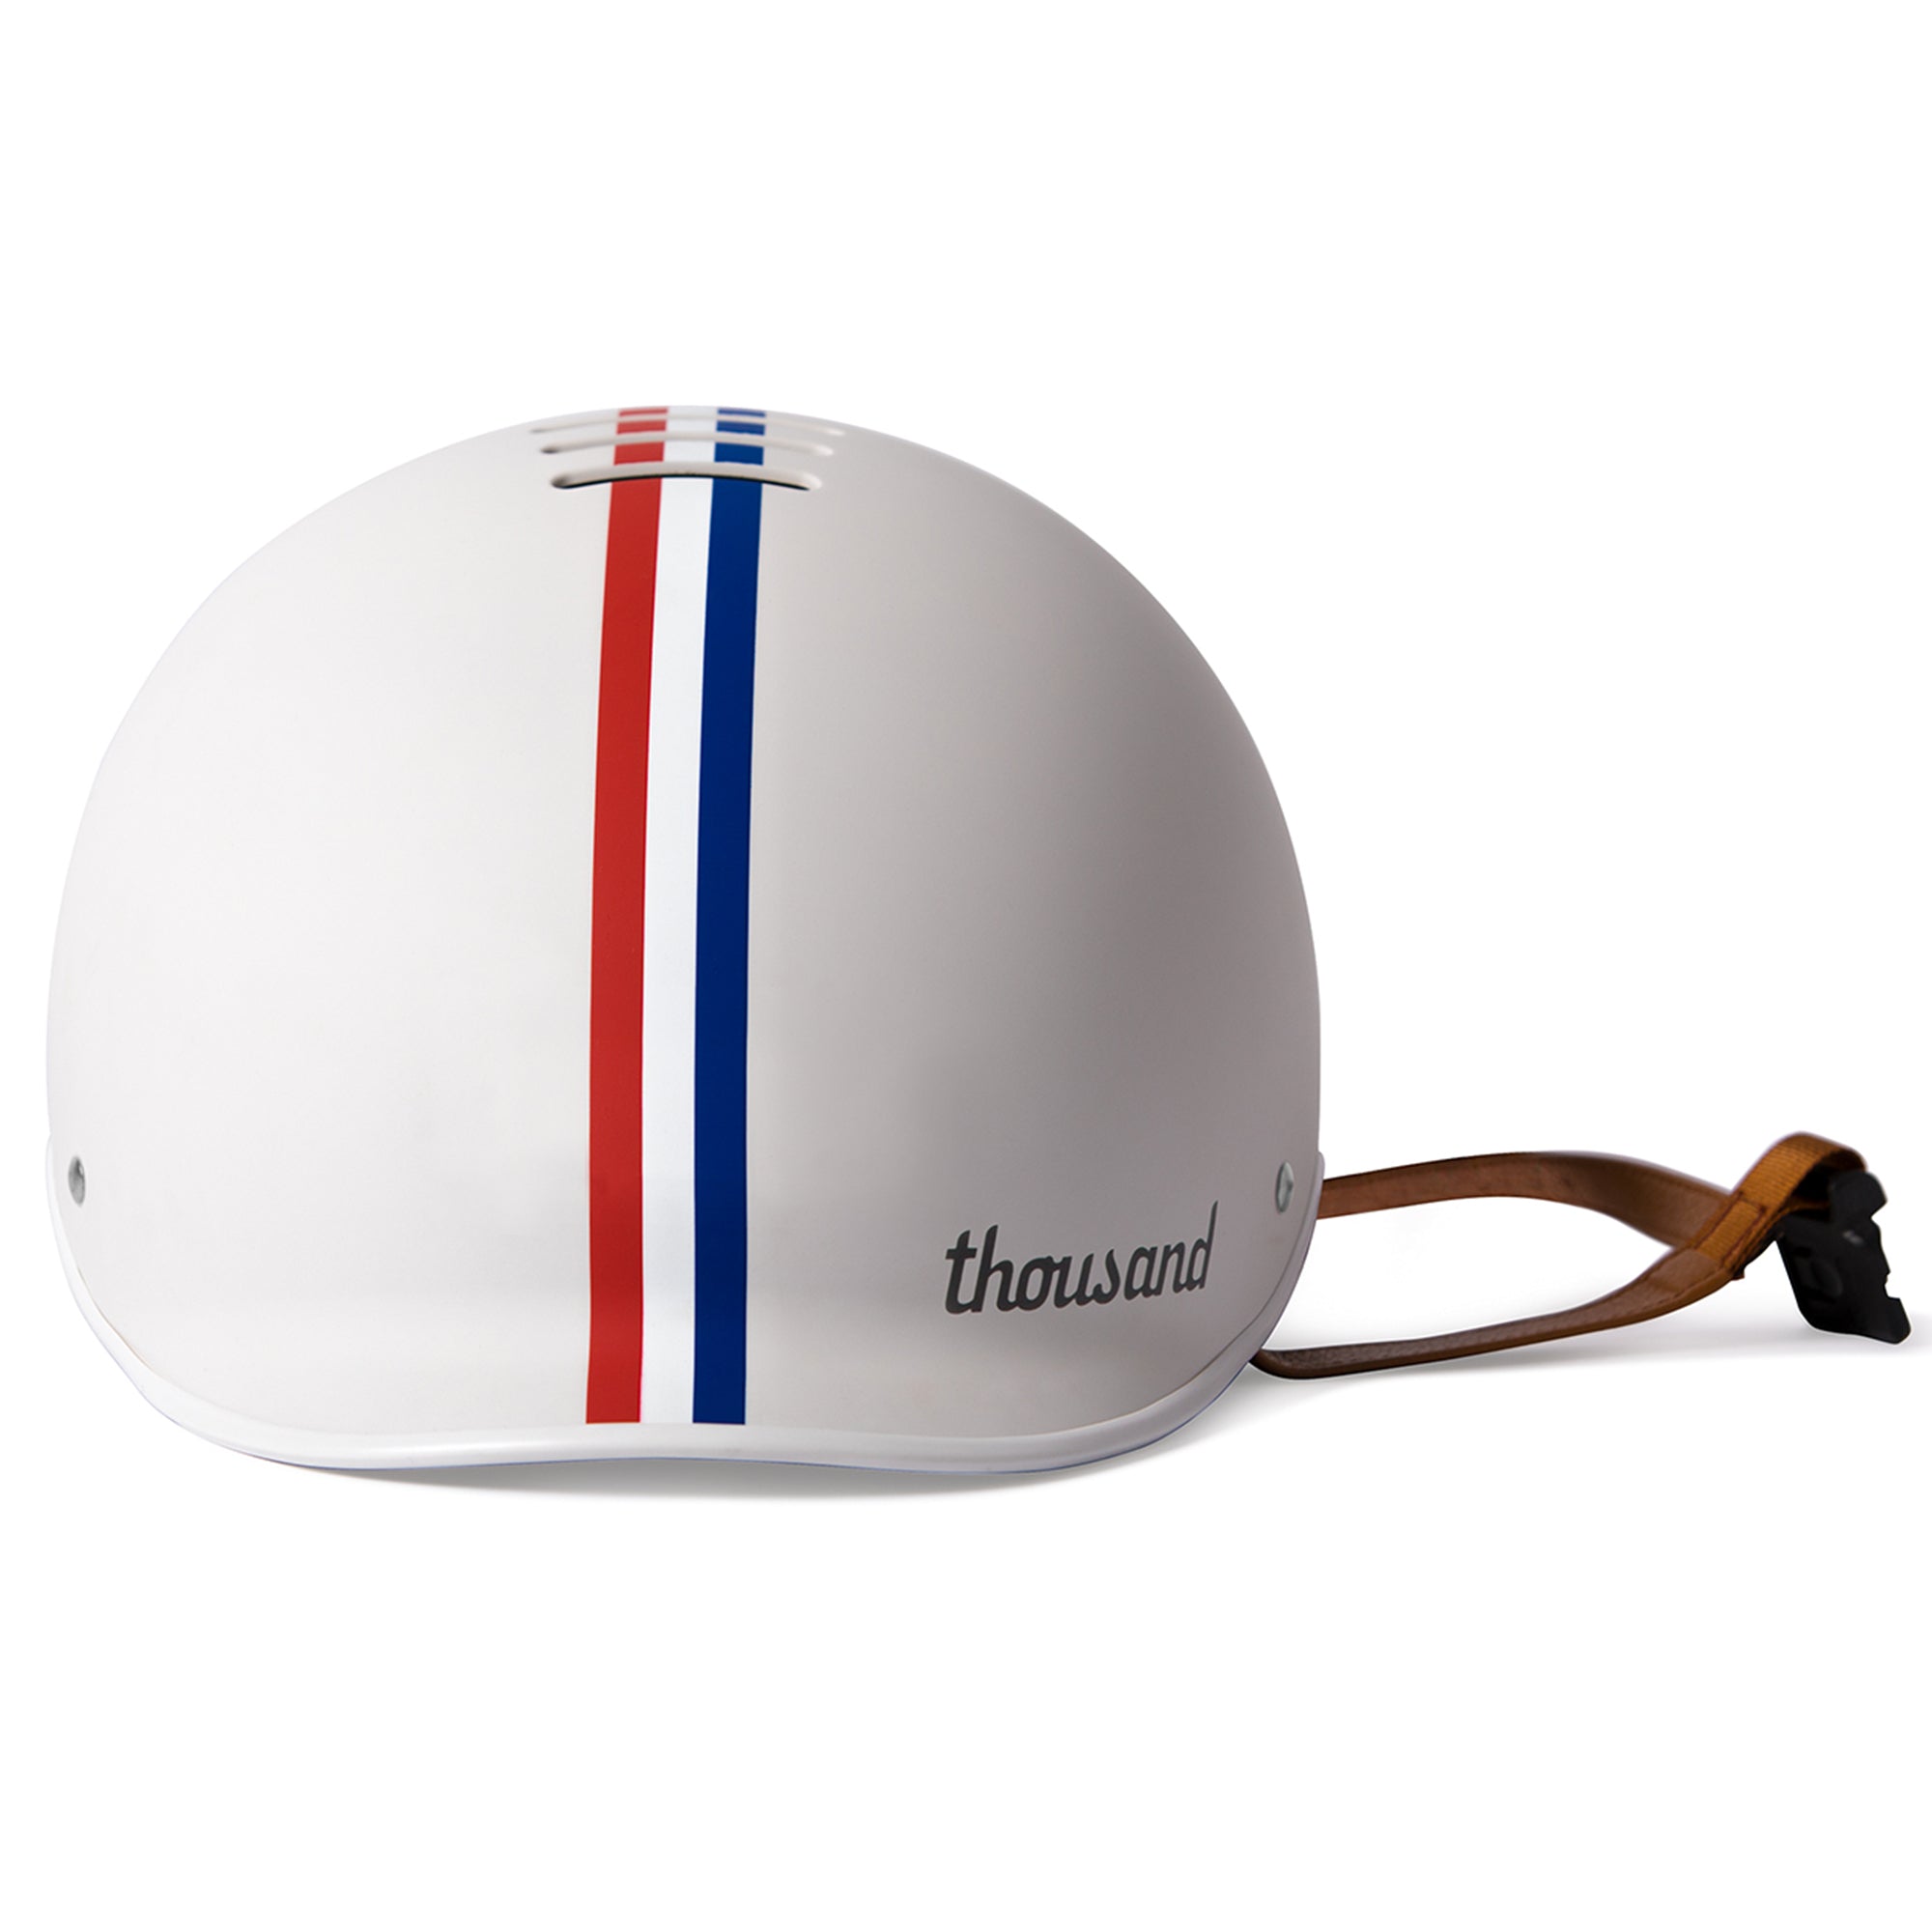 Free thousand Heritage Helmet - GOTRAX